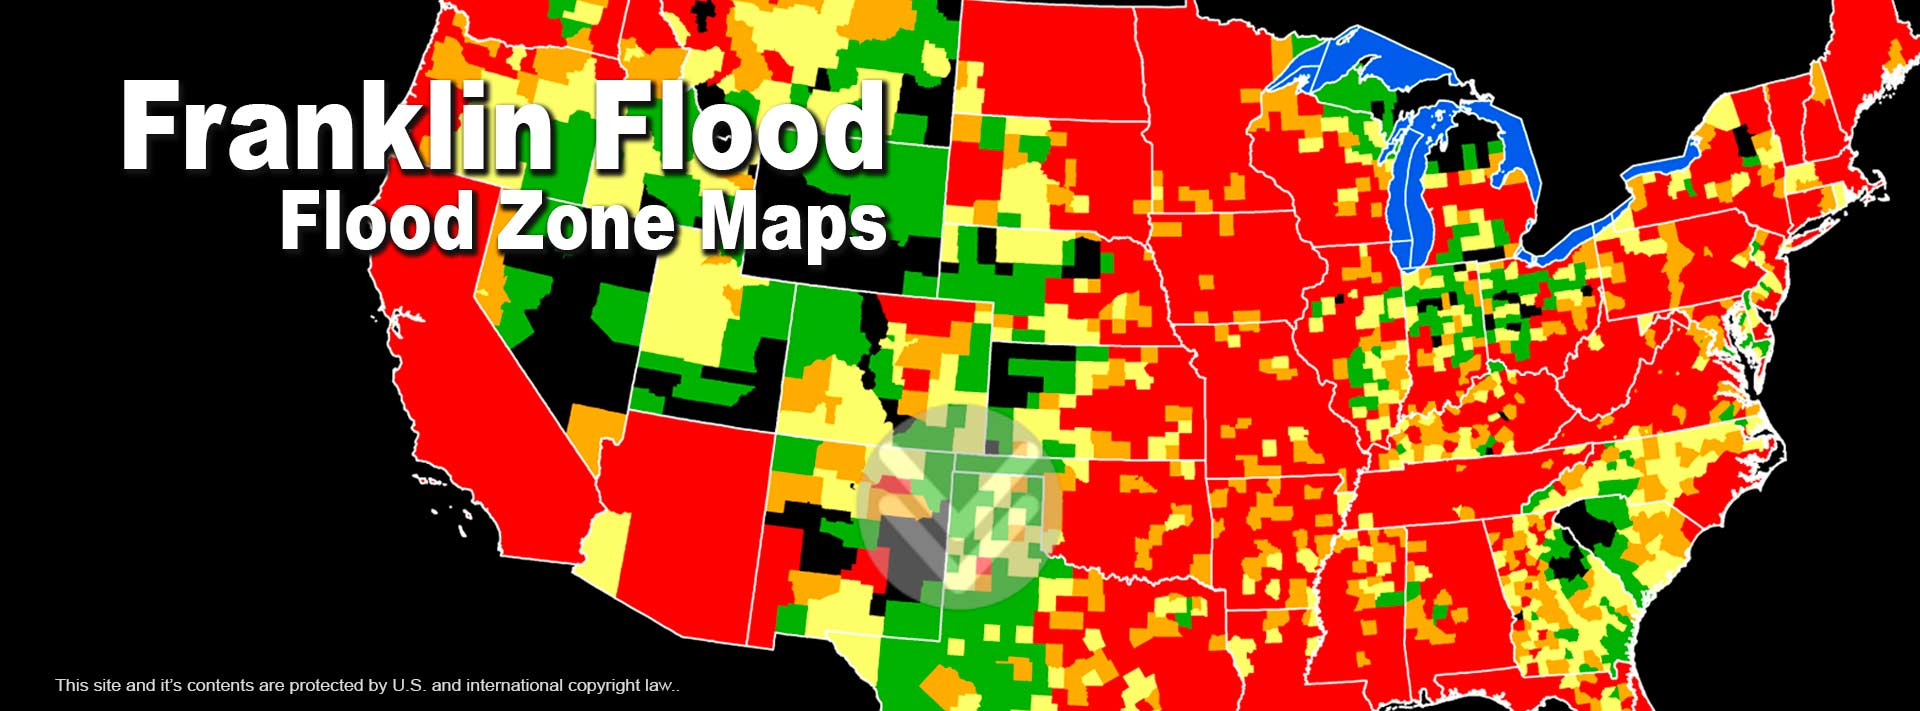 Flood Zone Rate Maps Explained - Texas Flood Zone Map